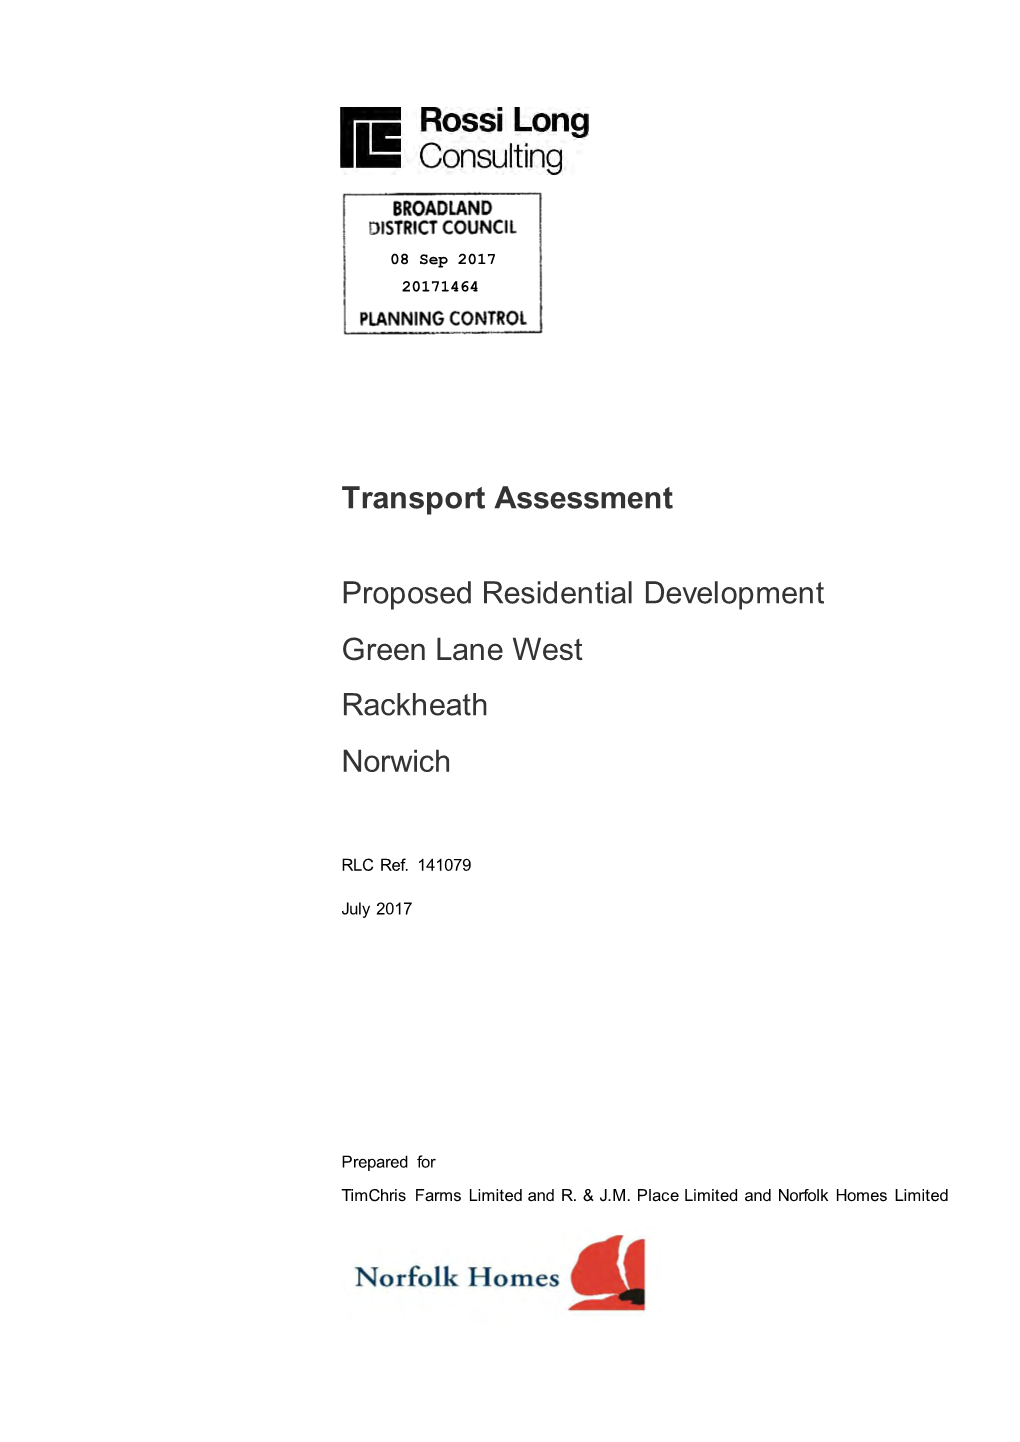 Transport Assessment Proposed Residential Development Green